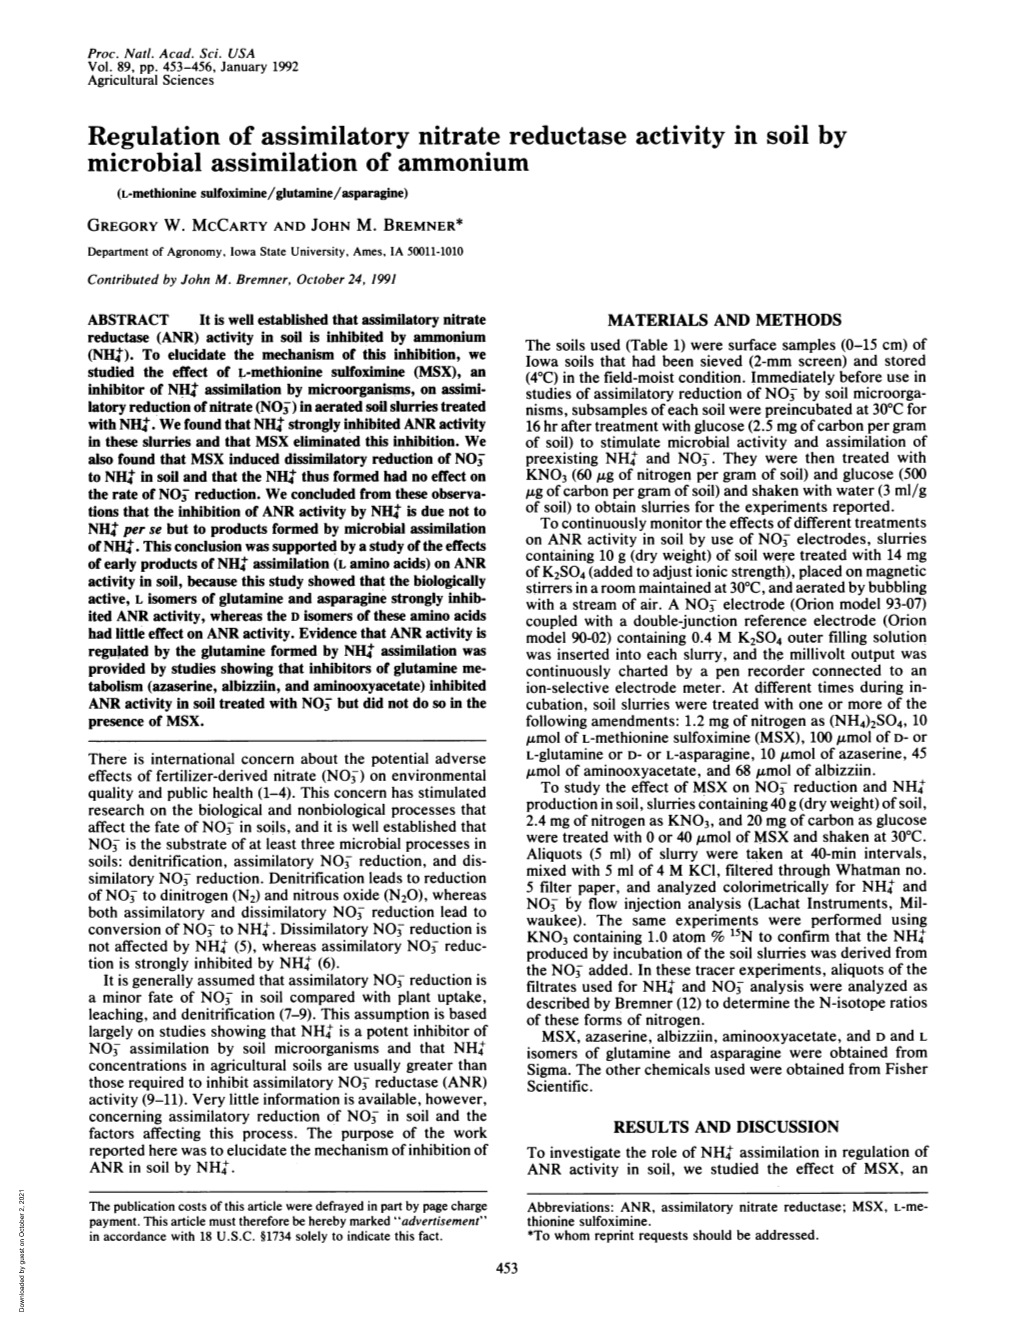 Microbial Assimilation of Ammonium (L-Methionine Sulfoximine/Glutamine/Asparagine) GREGORY W